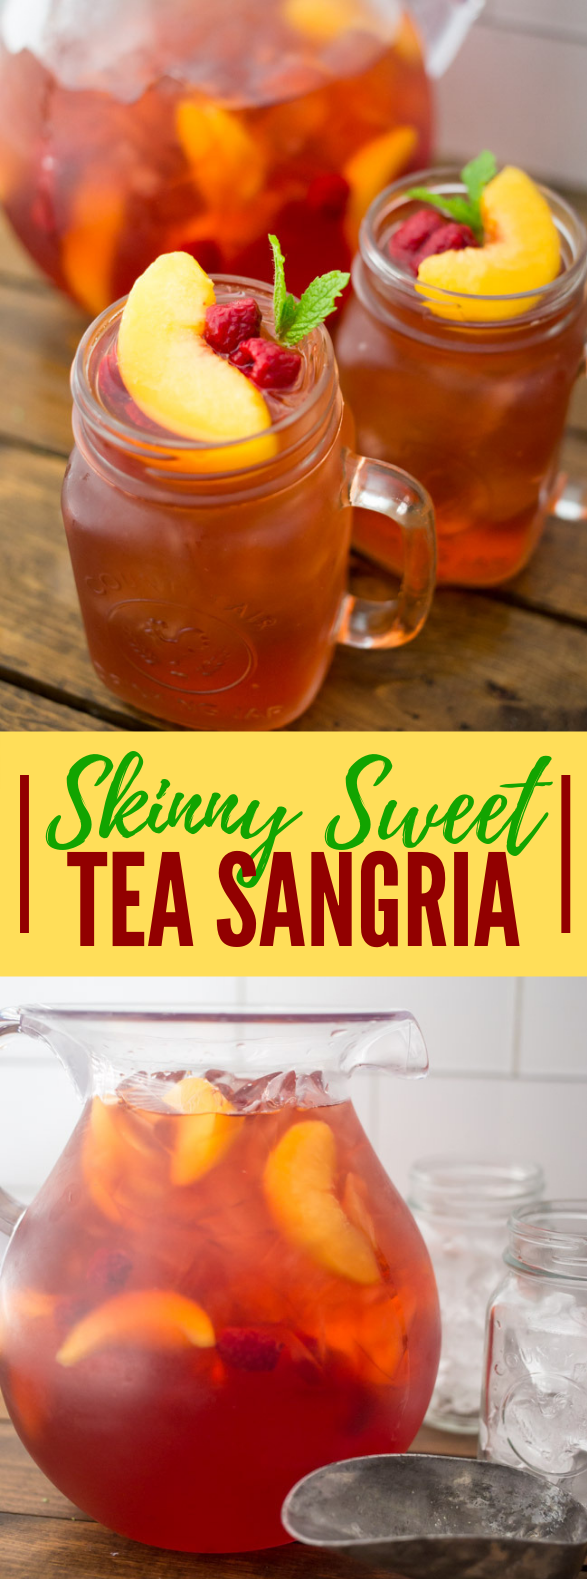 Skinny Sweet Tea Sangria #drinks #cocktails